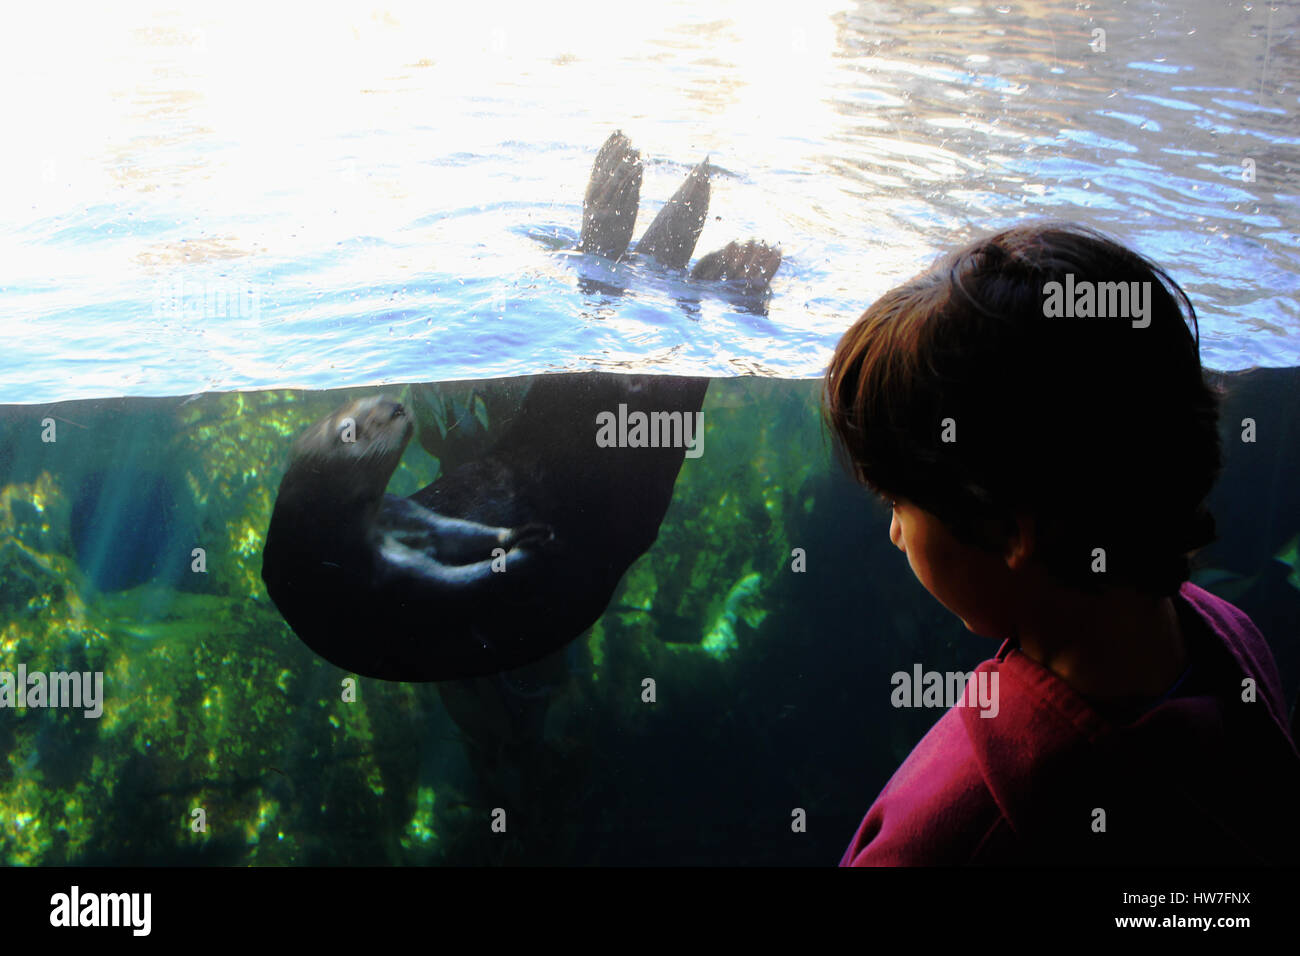 Monterey bay aquarium Stock Photo